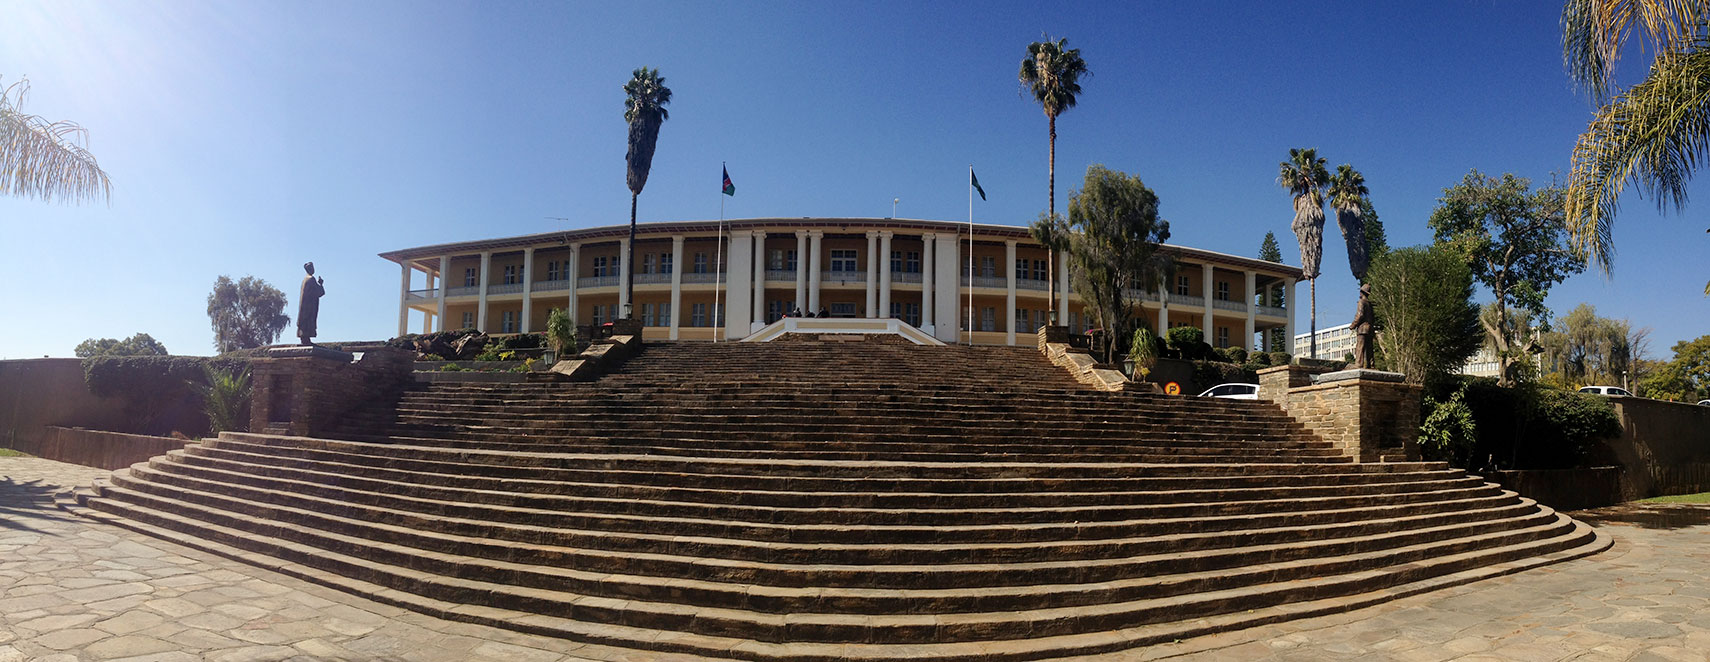 Tintenpalast, Namibia's parliament in Windhoek